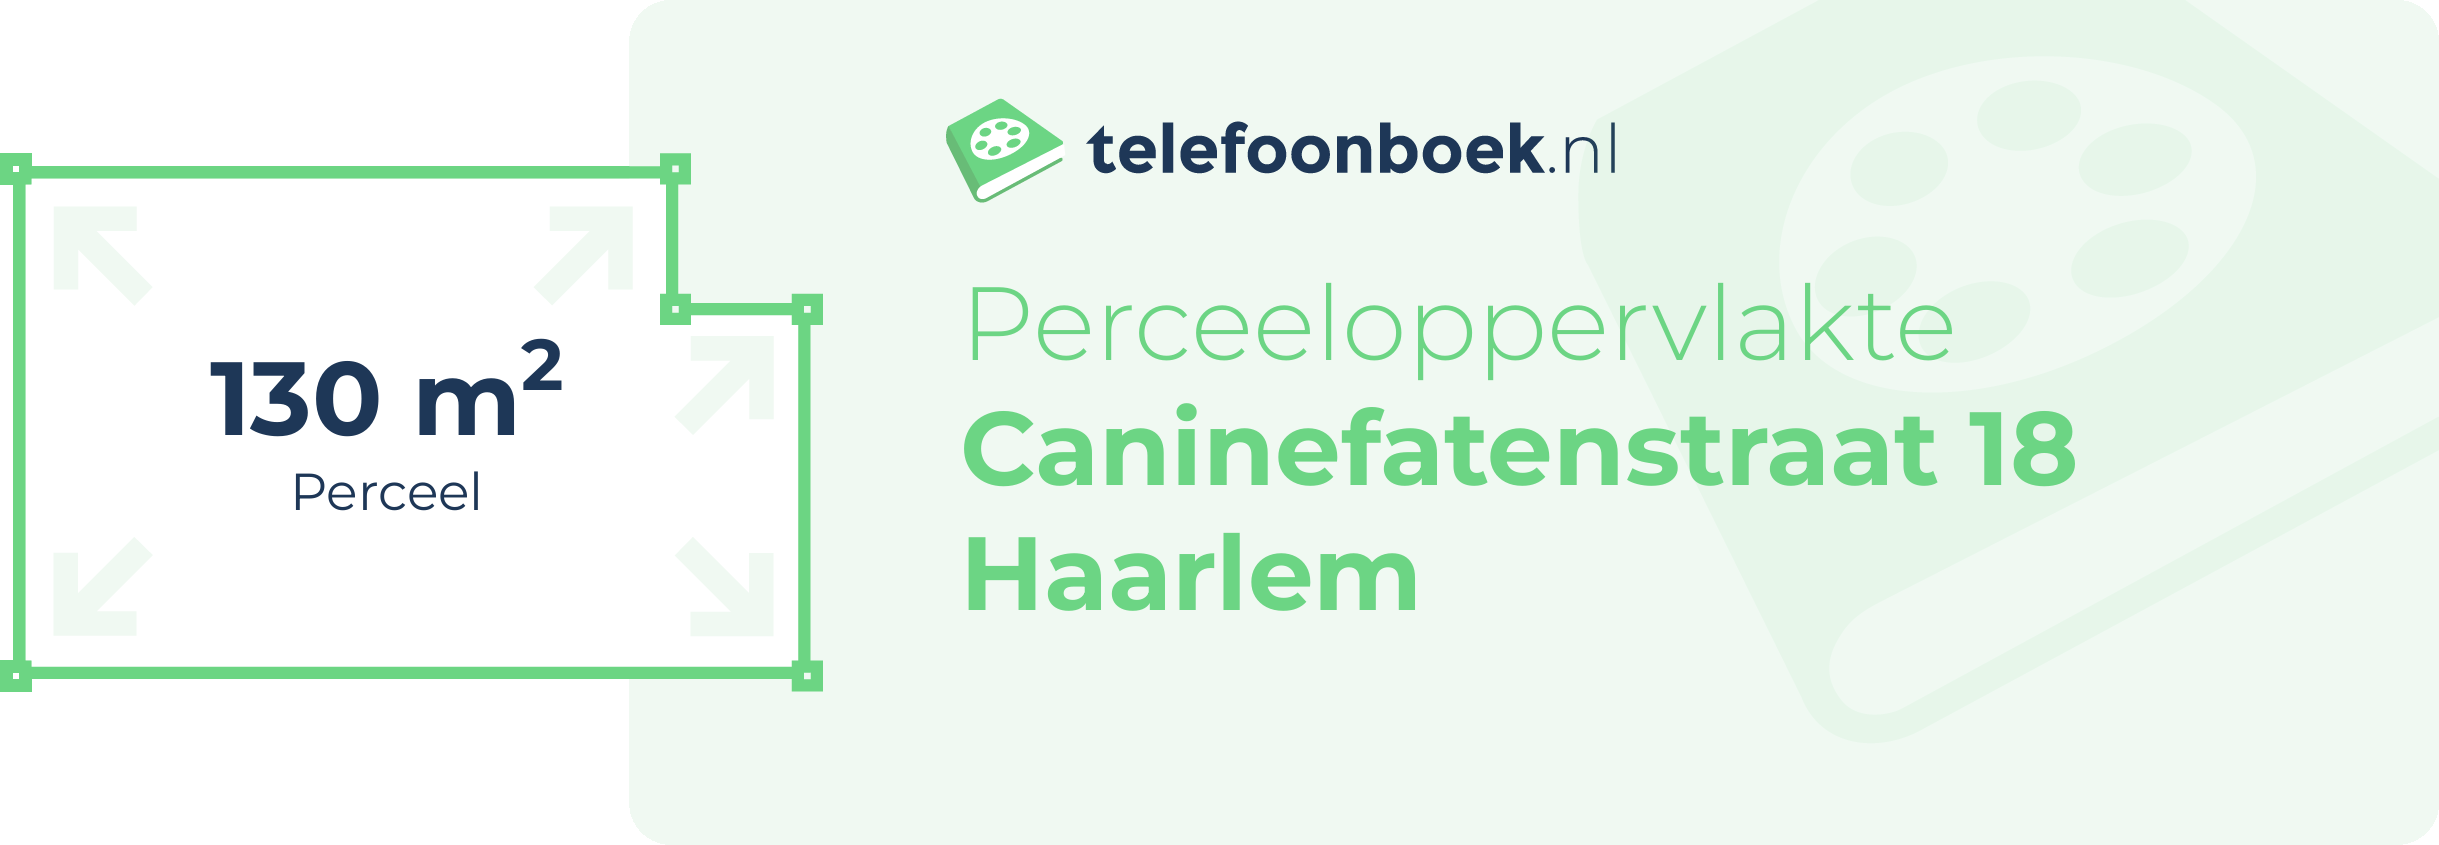 Perceeloppervlakte Caninefatenstraat 18 Haarlem